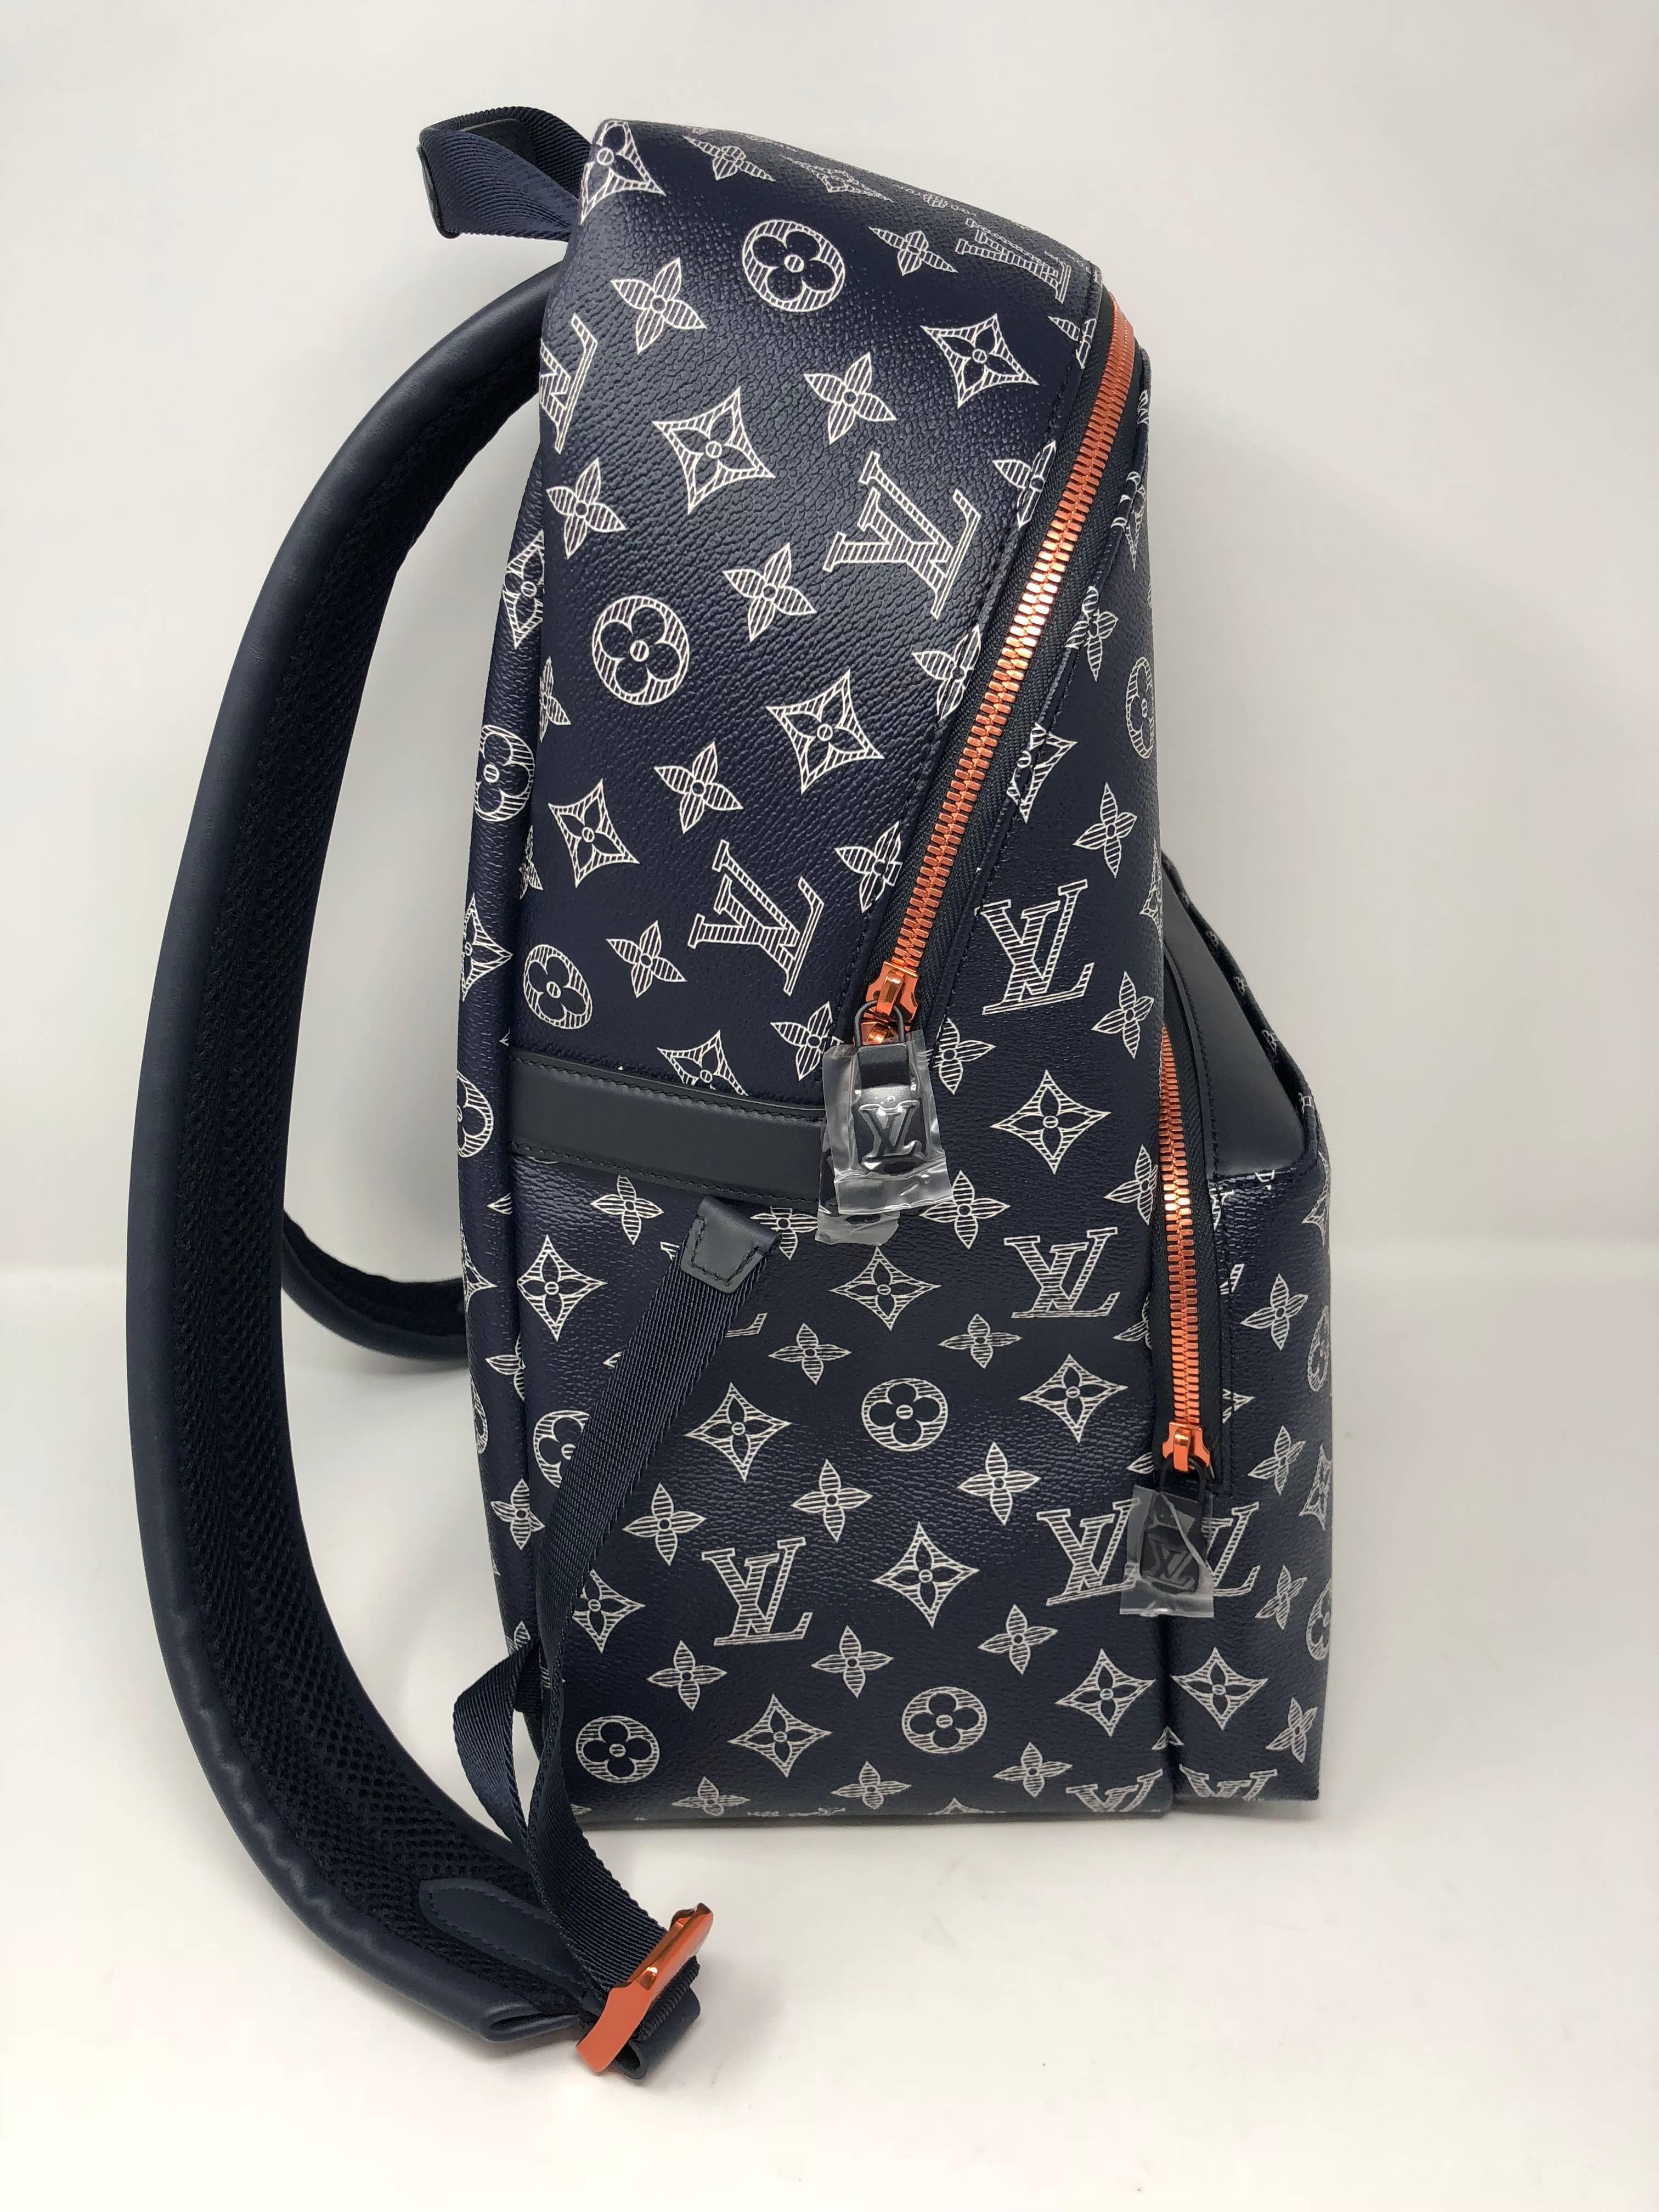 Black Louis Vuitton Apollo Upside Down Backpack